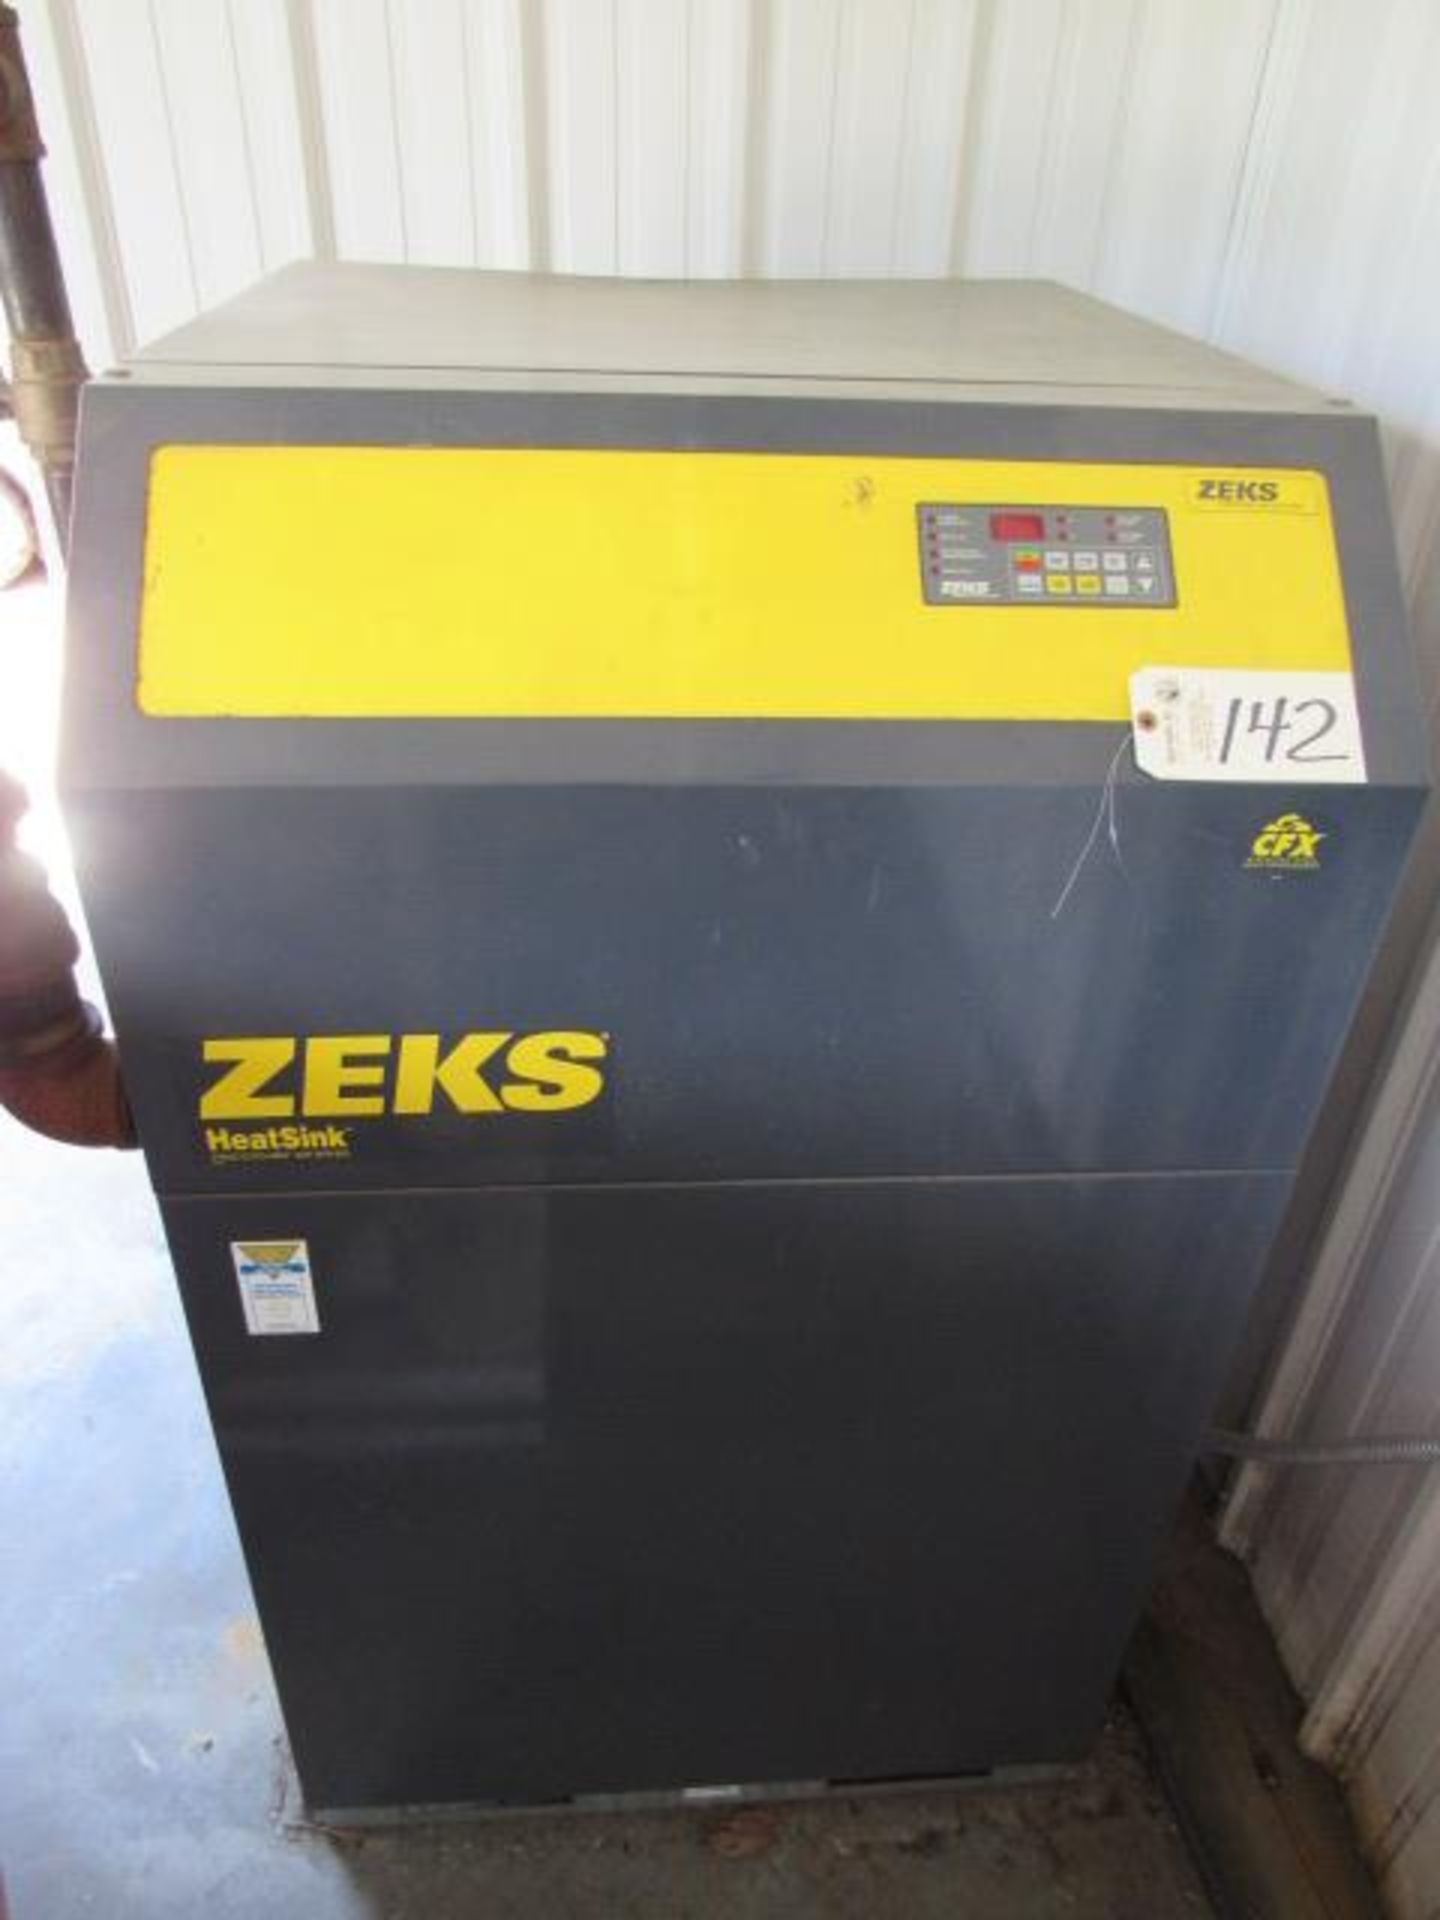 Zeks Model 500HSFA400 Heat Sink True Cycling Air Dryer - Image 2 of 3